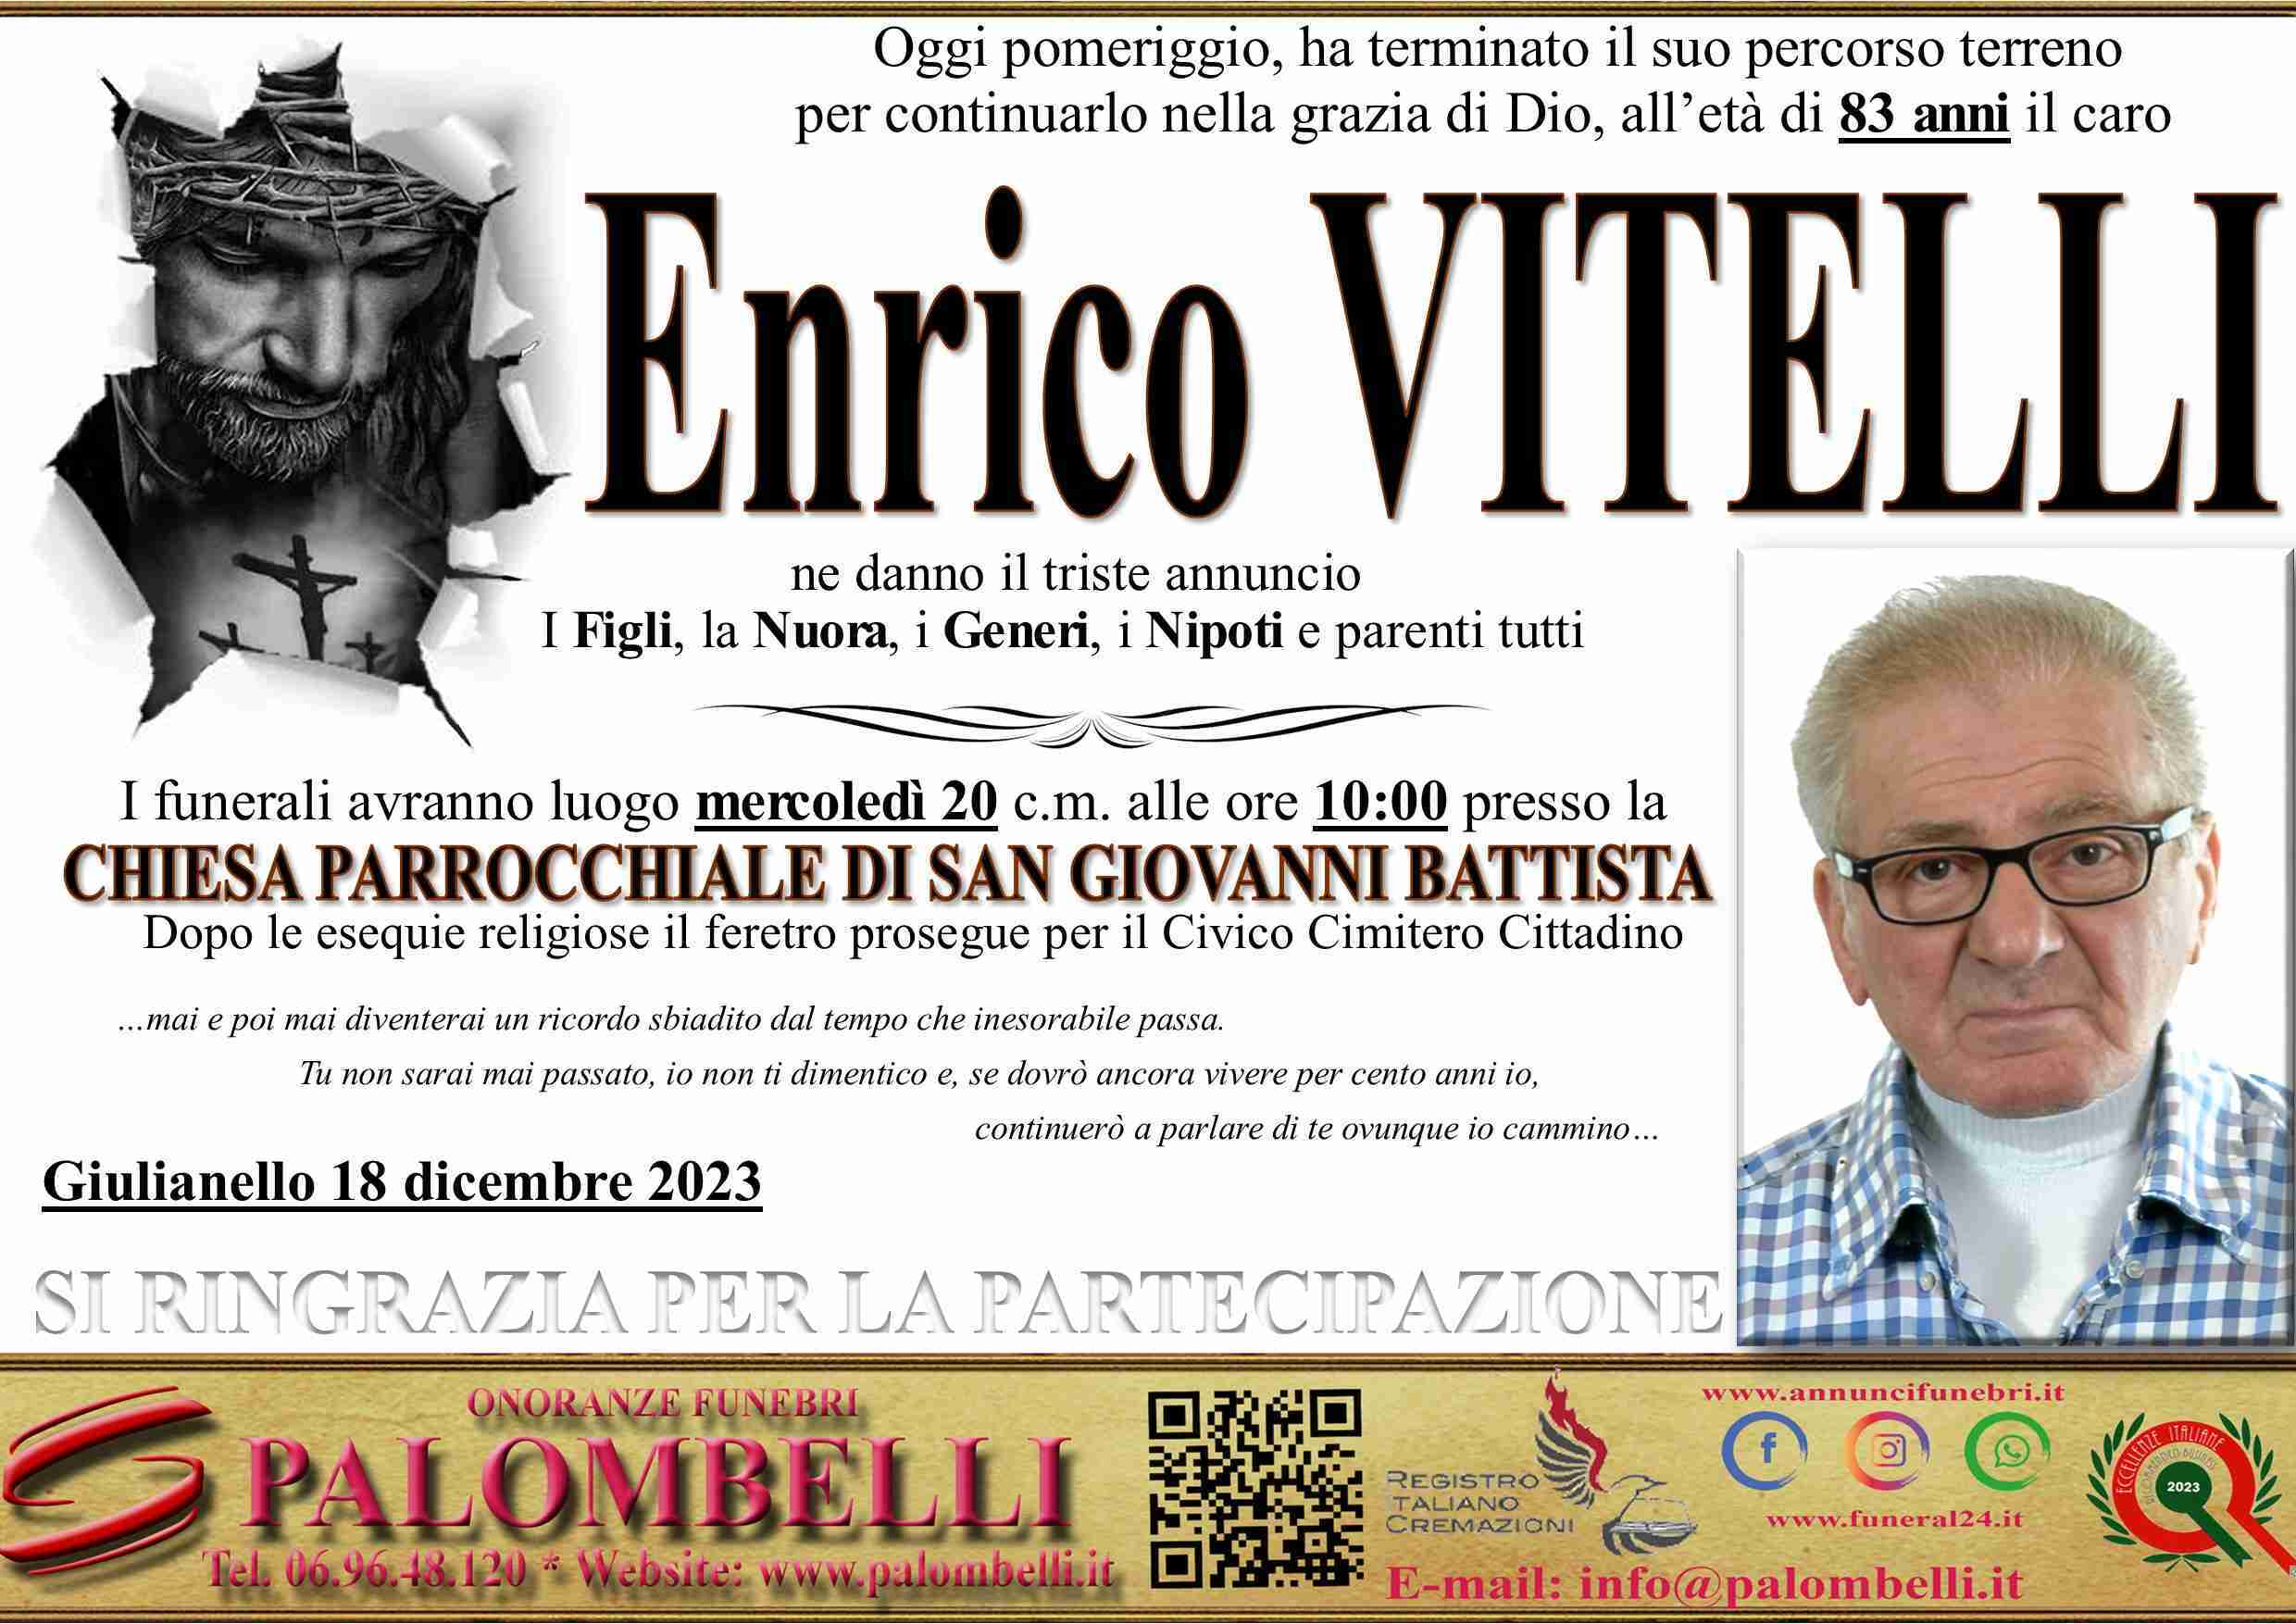 Enrico Vitelli